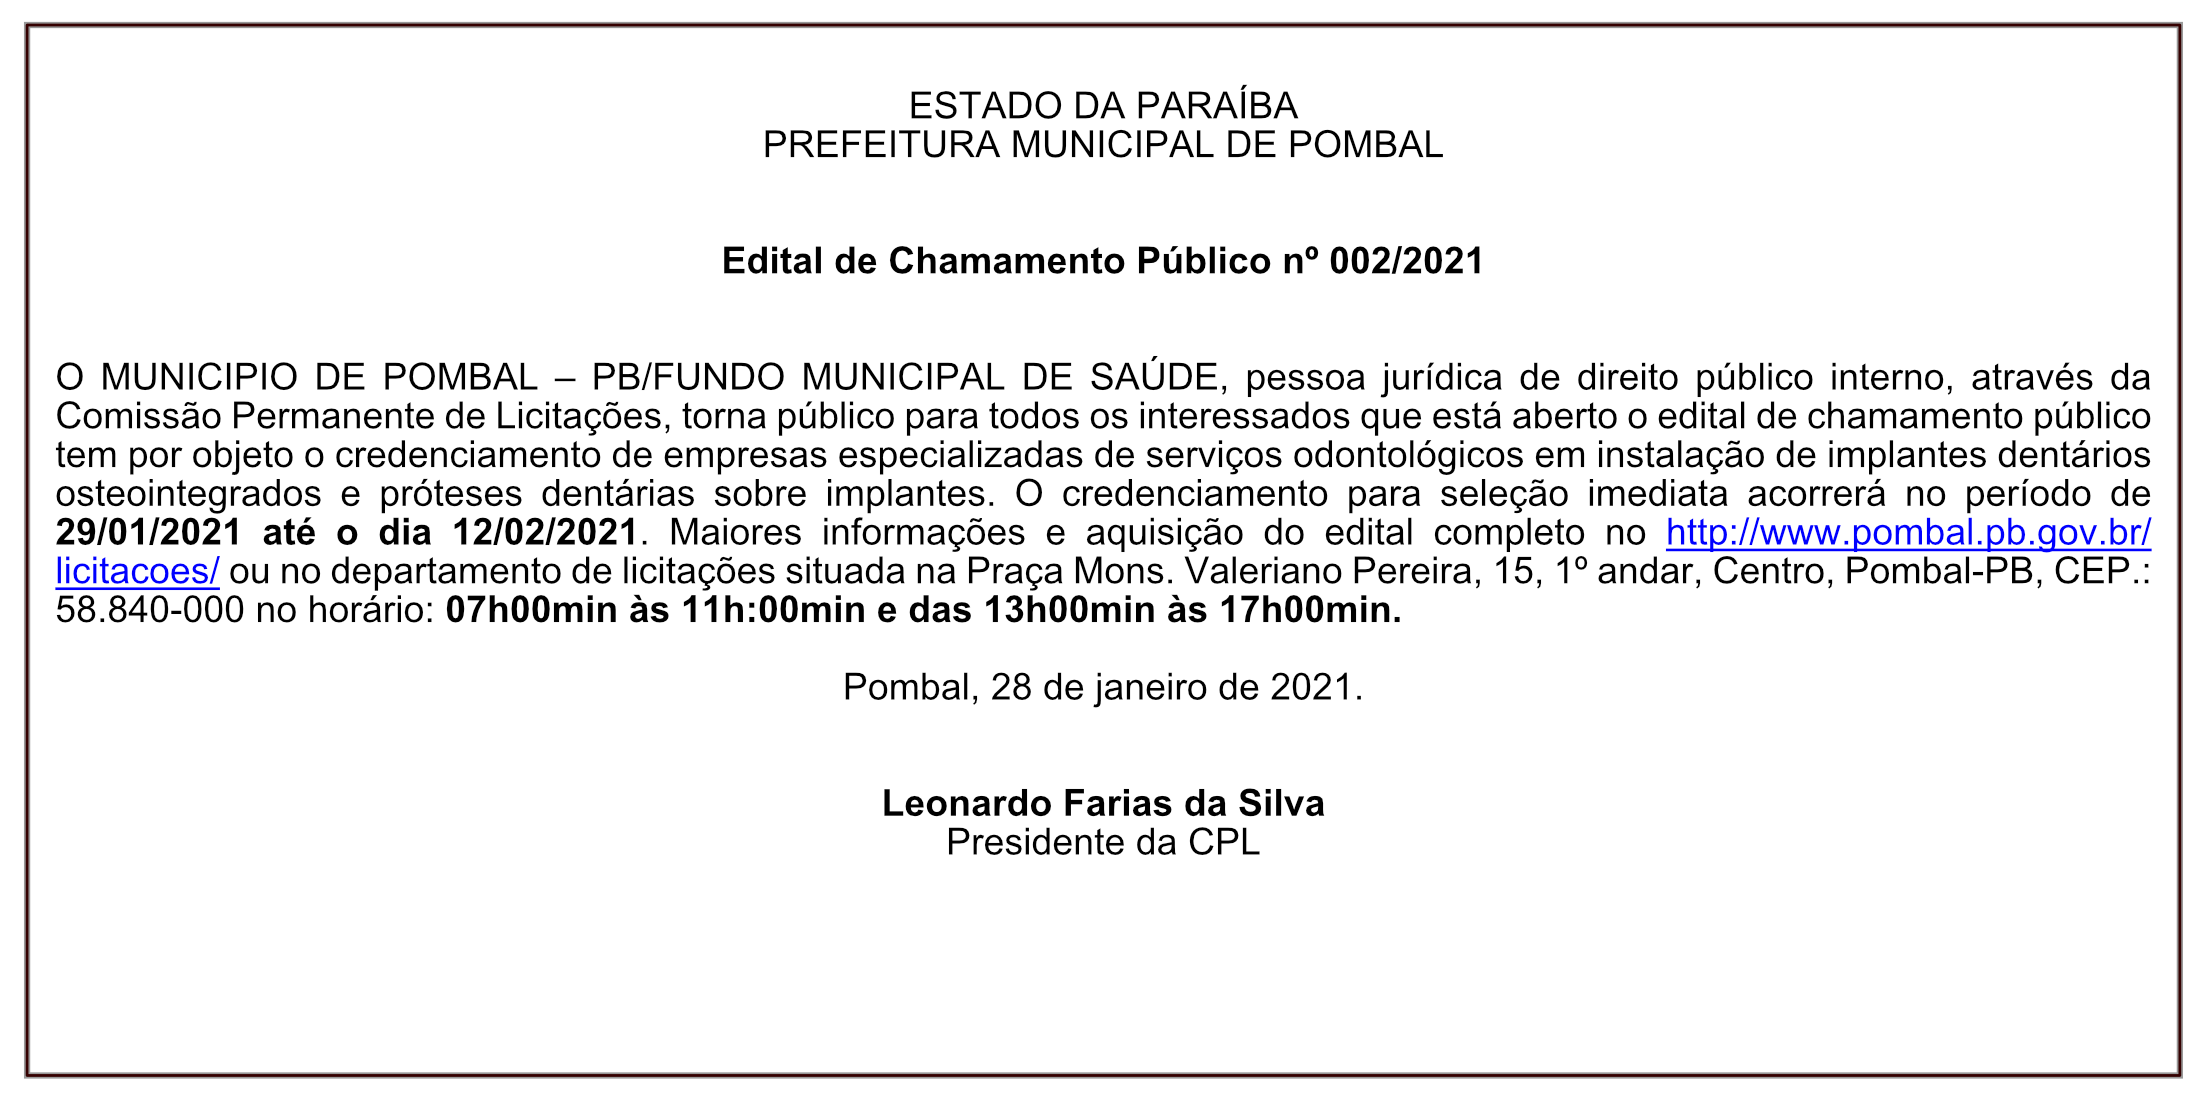 PREFEITURA MUNICIPAL DE POMBAL – Edital de Chamamento Público Nº 002/2021